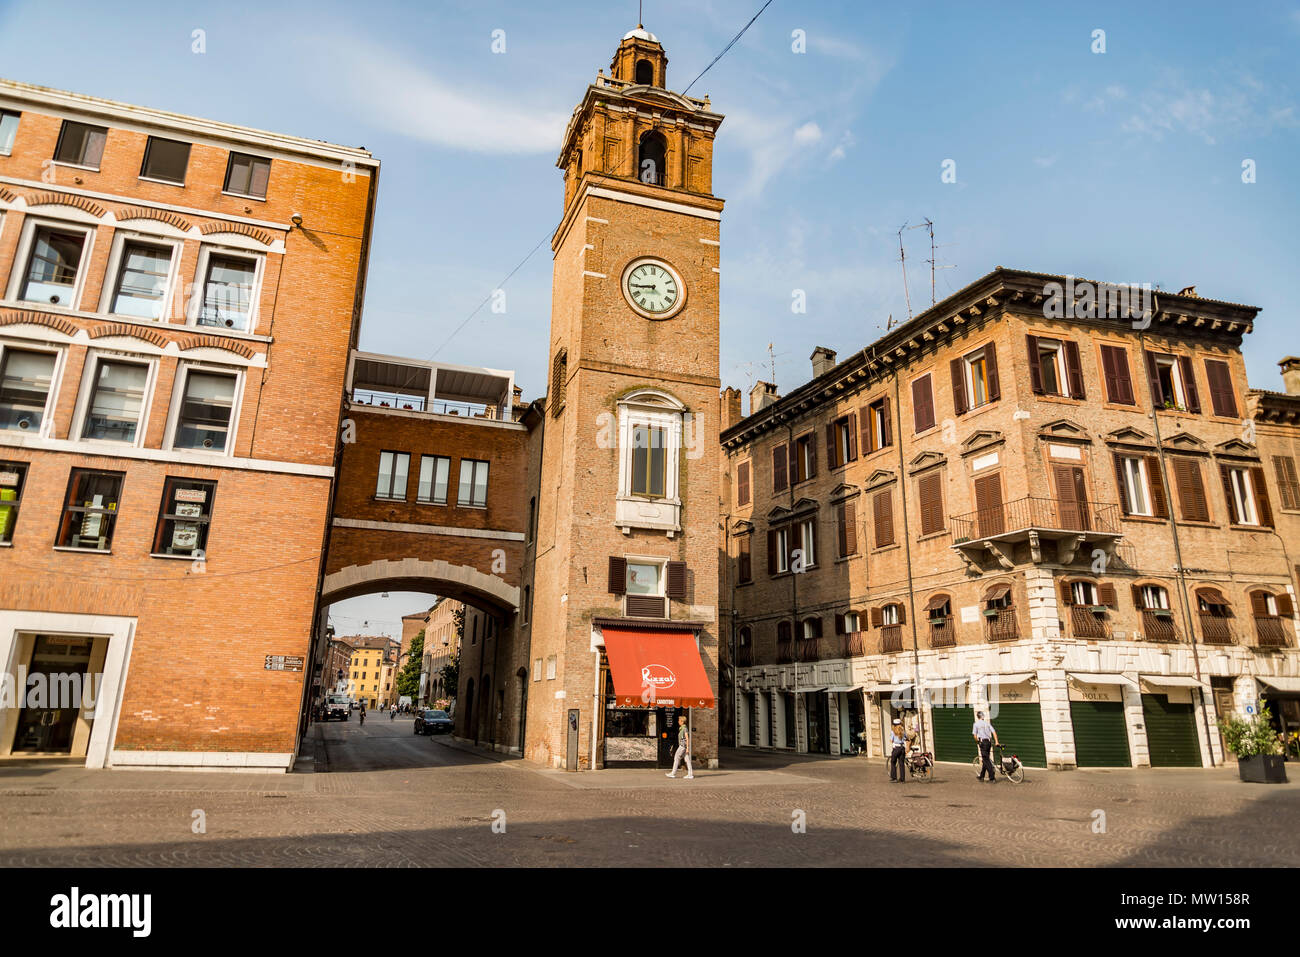 The Square Trento and Trieste in Ferrara - Italy Stock Photo